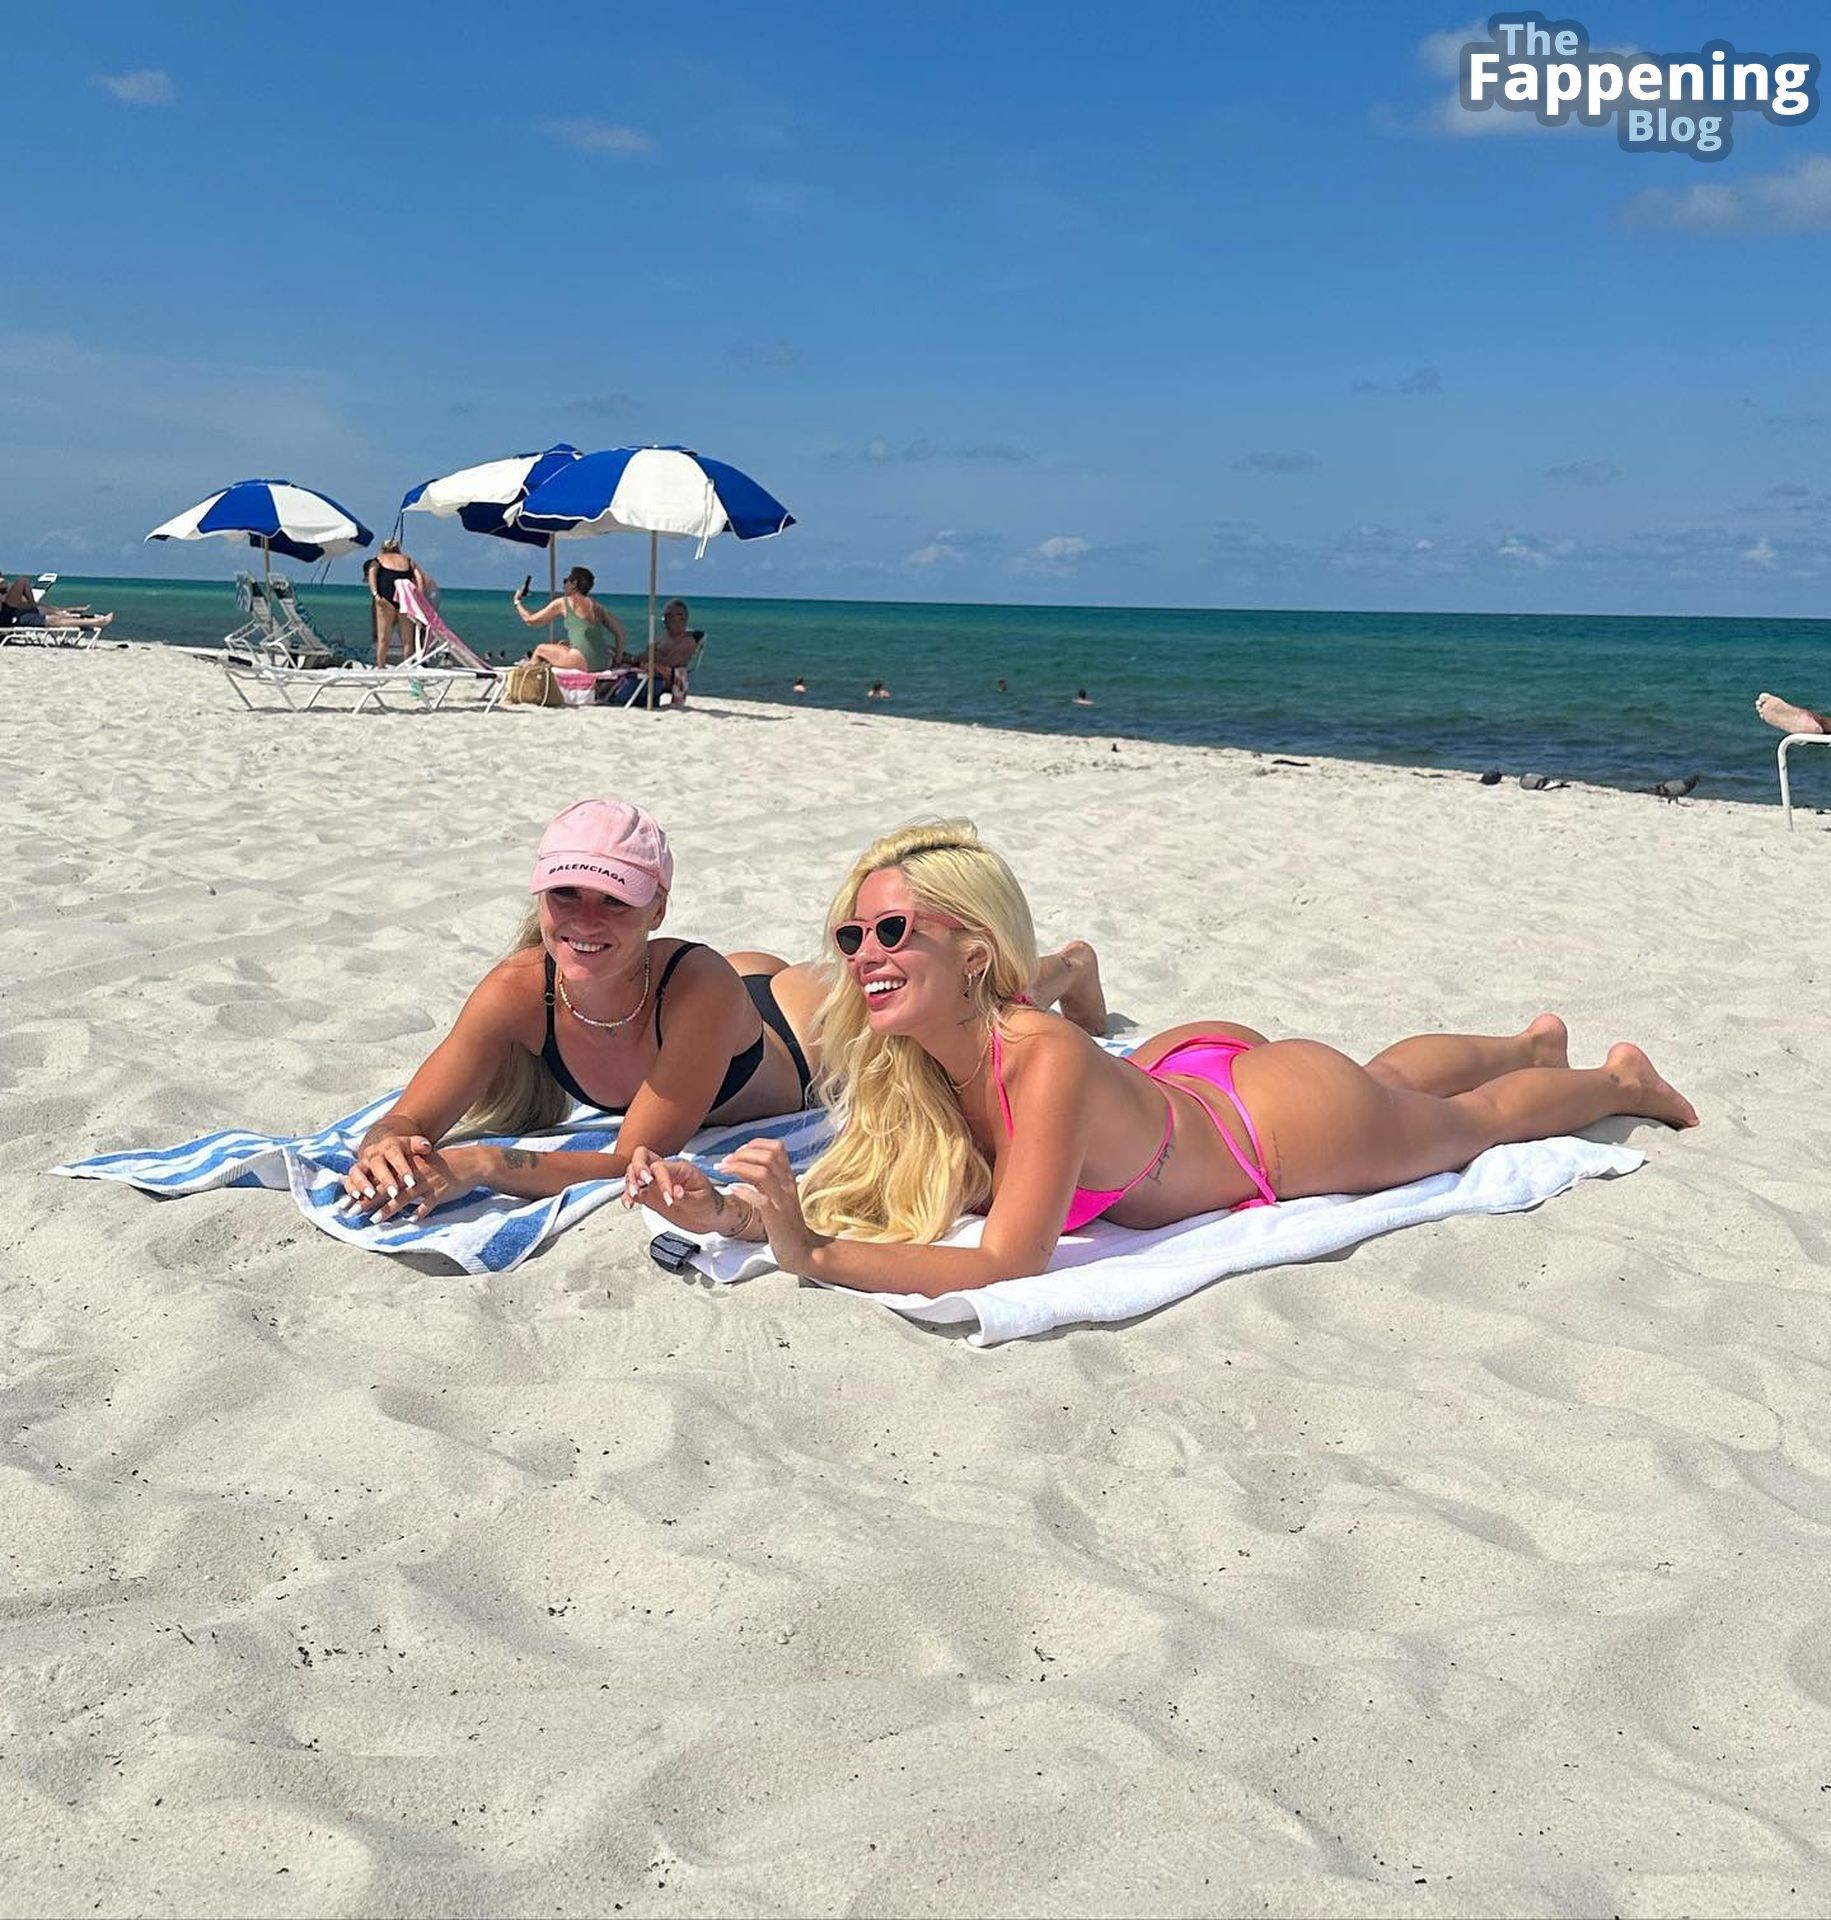 Alisha Lehmann Enjoys a Holiday with Karoline Lima in Miami (24 Photos)